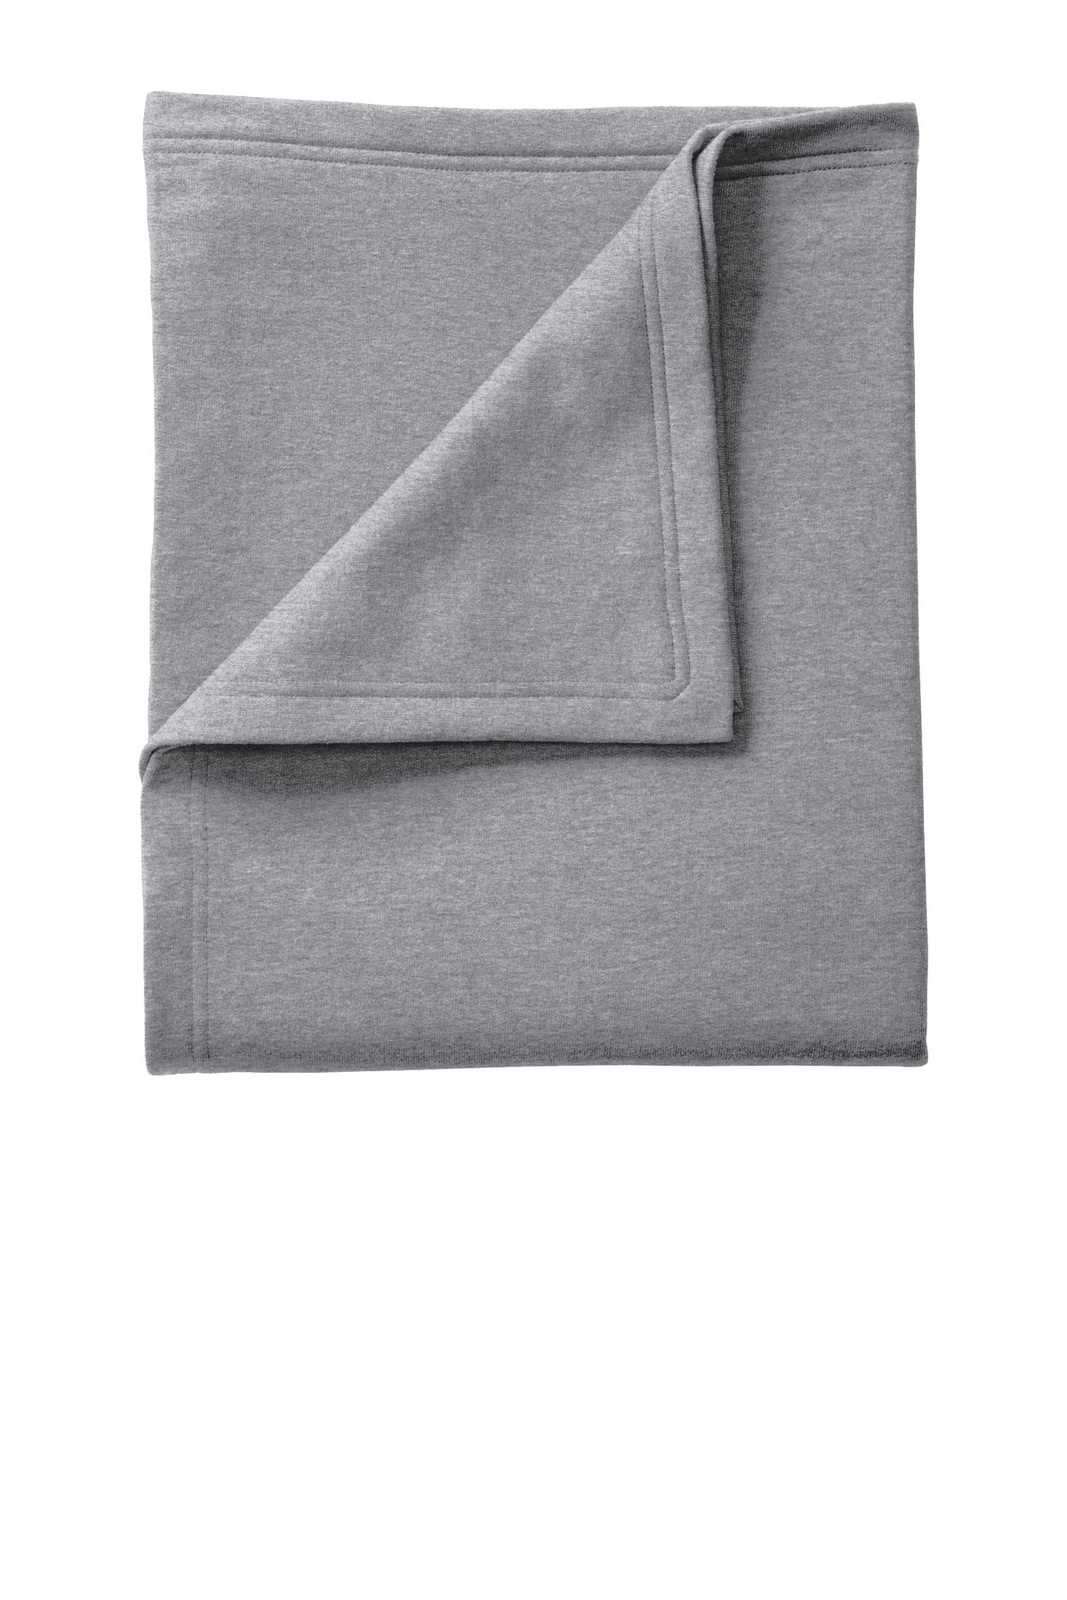 Port & Company BP78 Core Fleece Sweatshirt Blanket - Athletic Heather - HIT a Double - 1